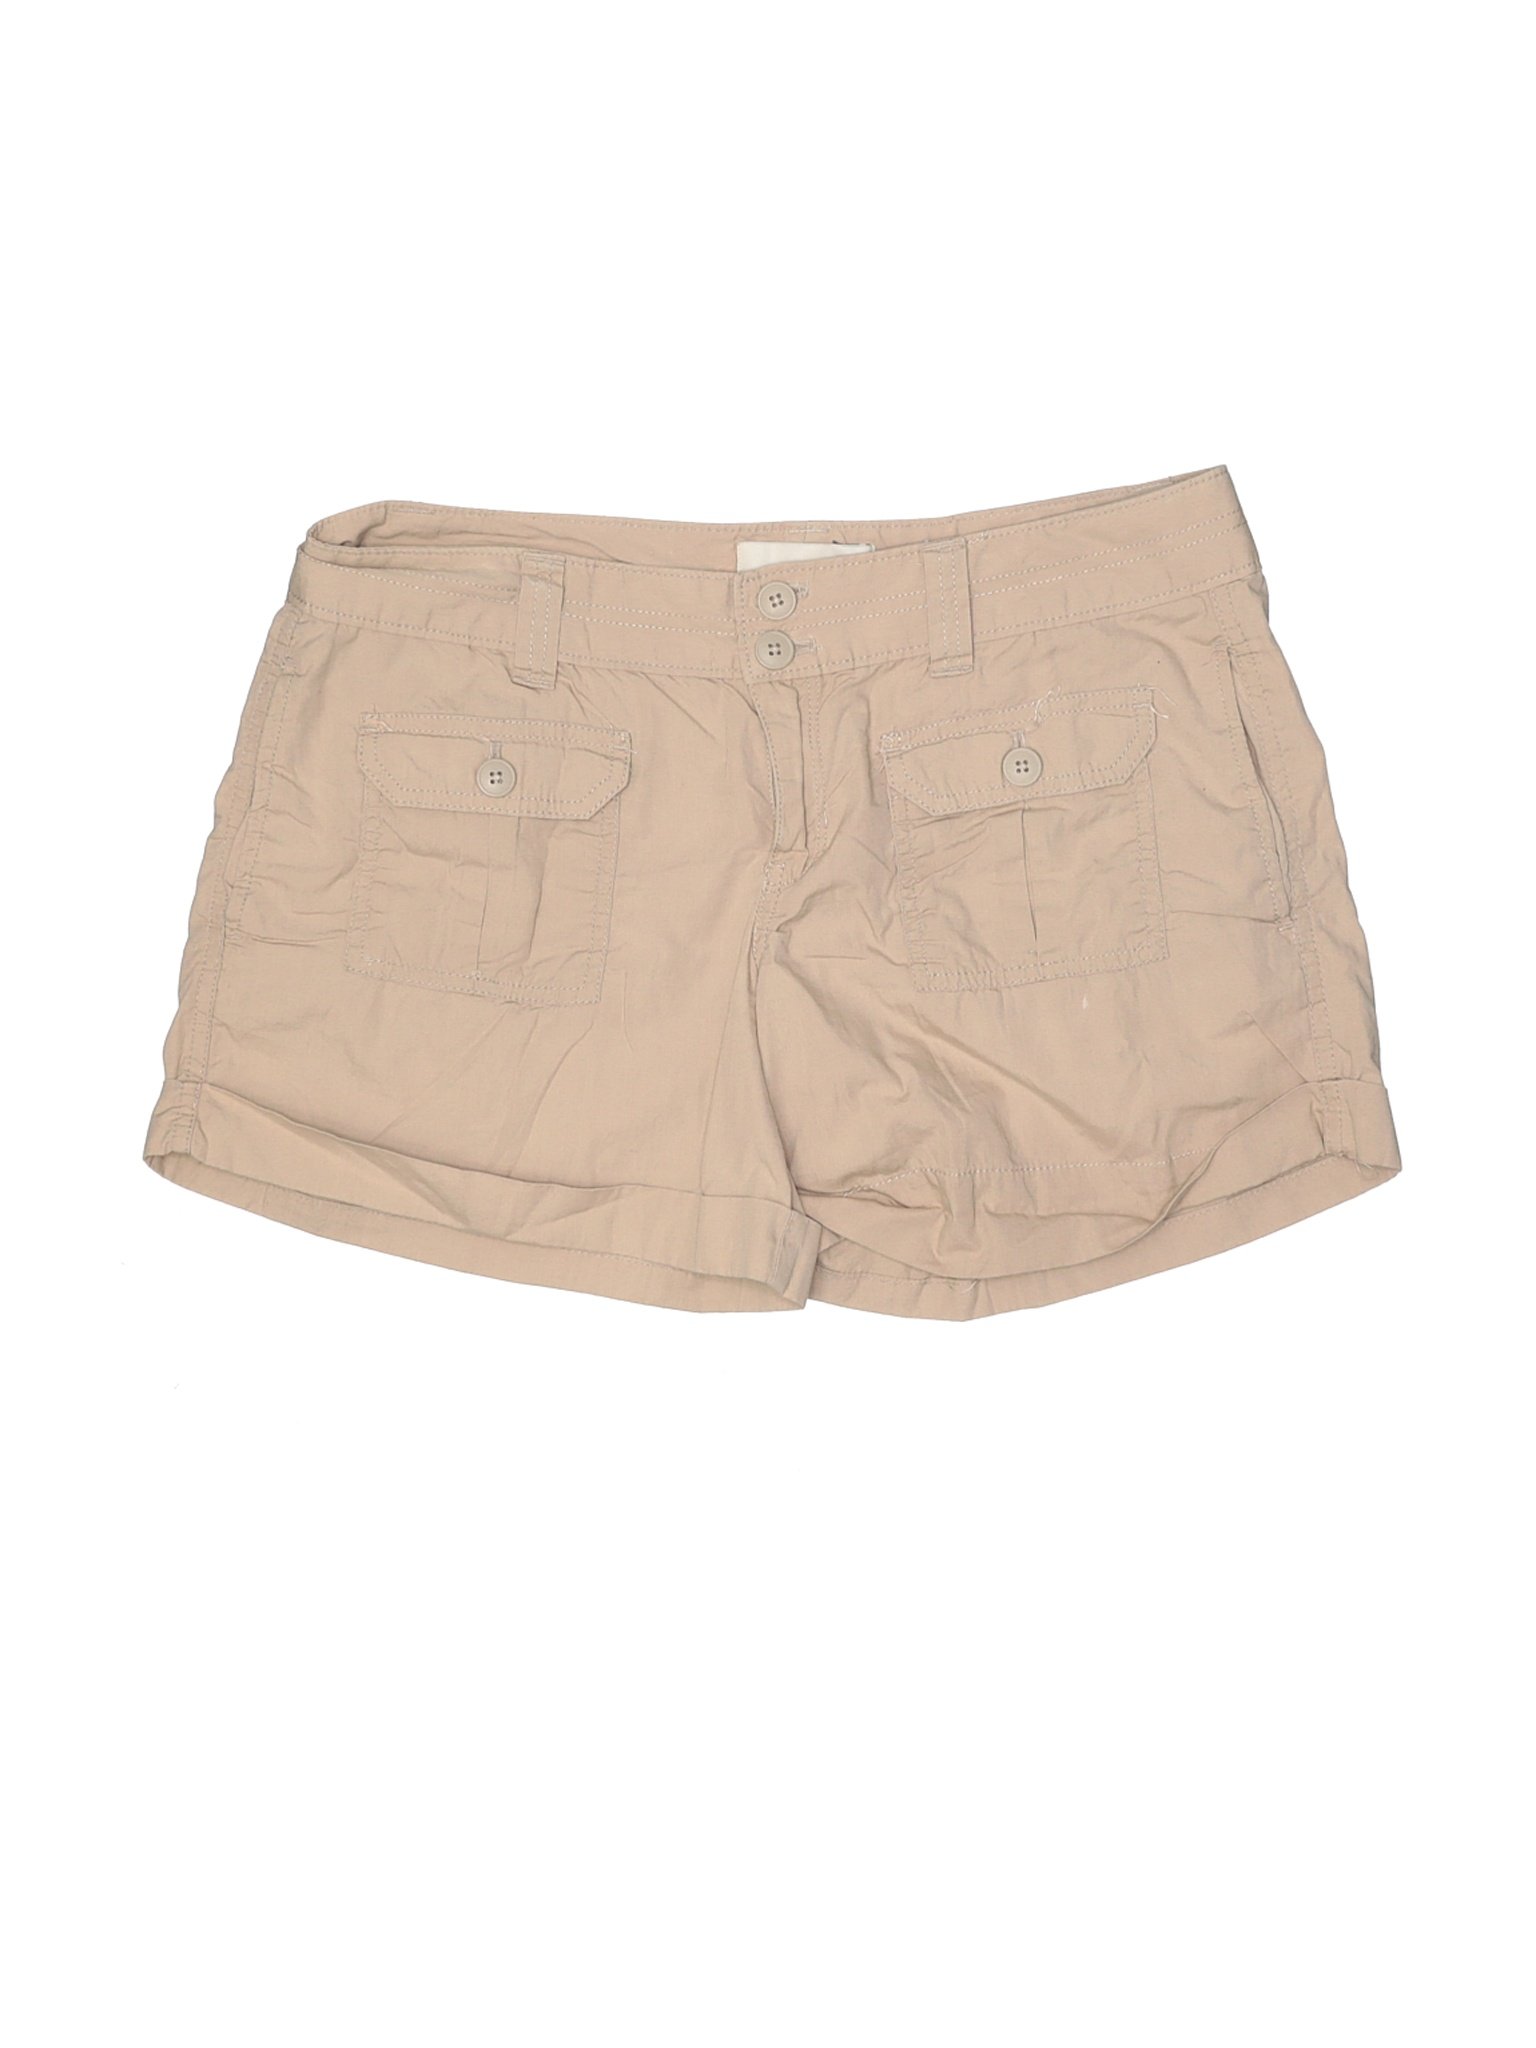 Old Navy Women Brown Cargo Shorts 8 | eBay